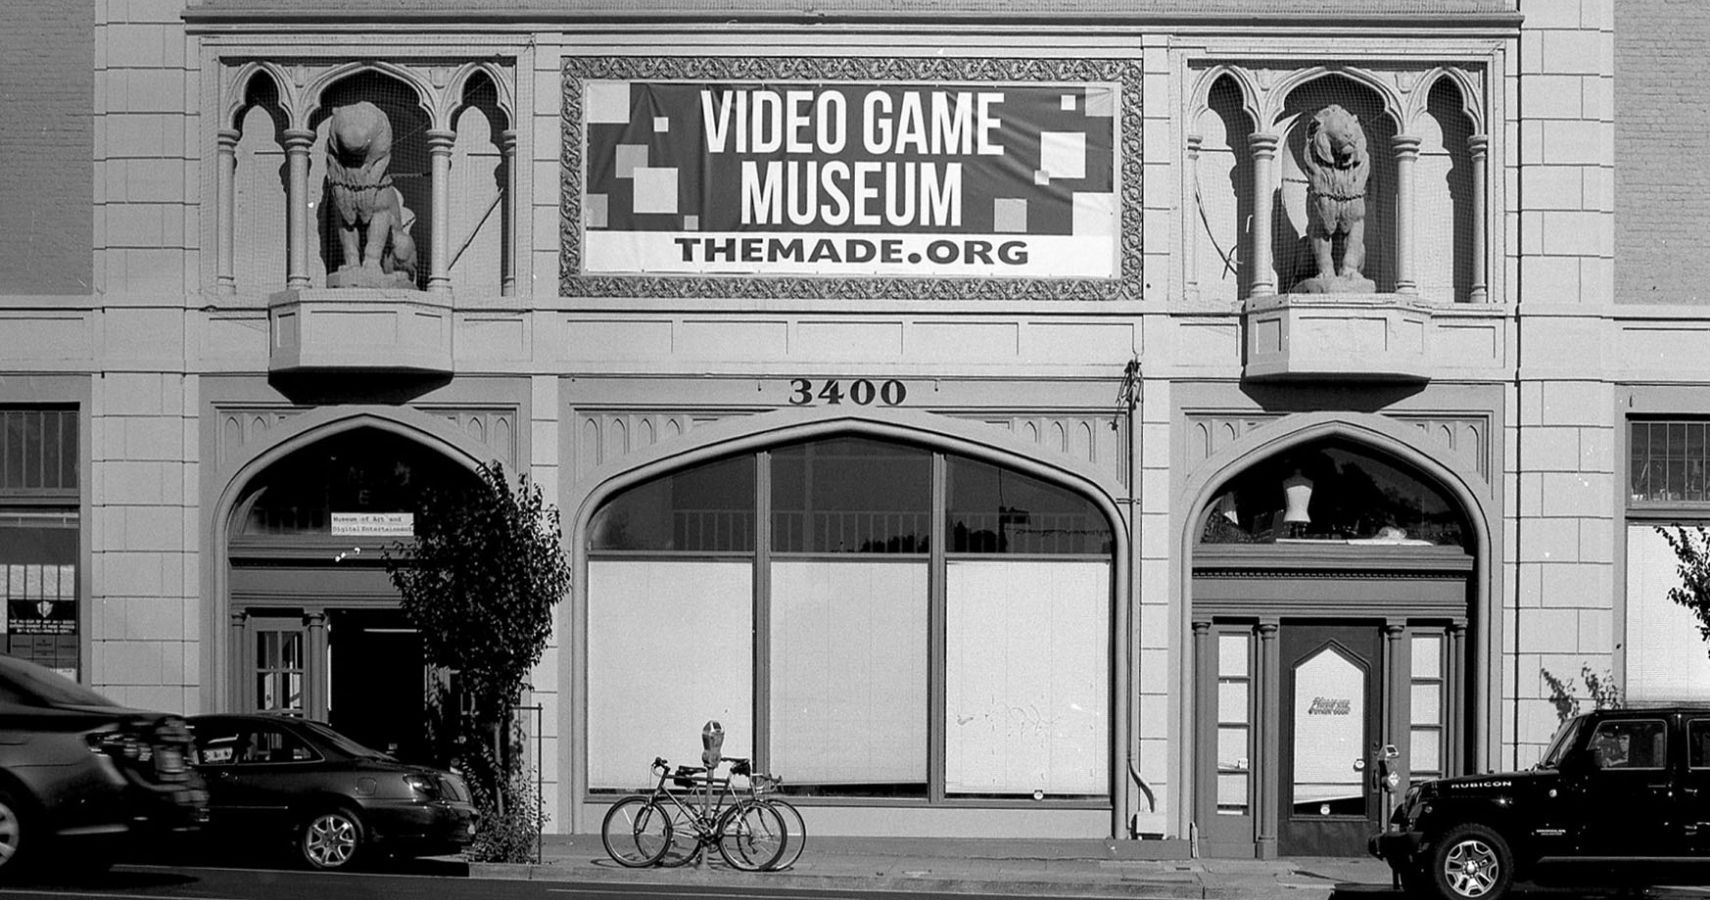 Noclip, Filming Documentaries & Preserving Video Game History